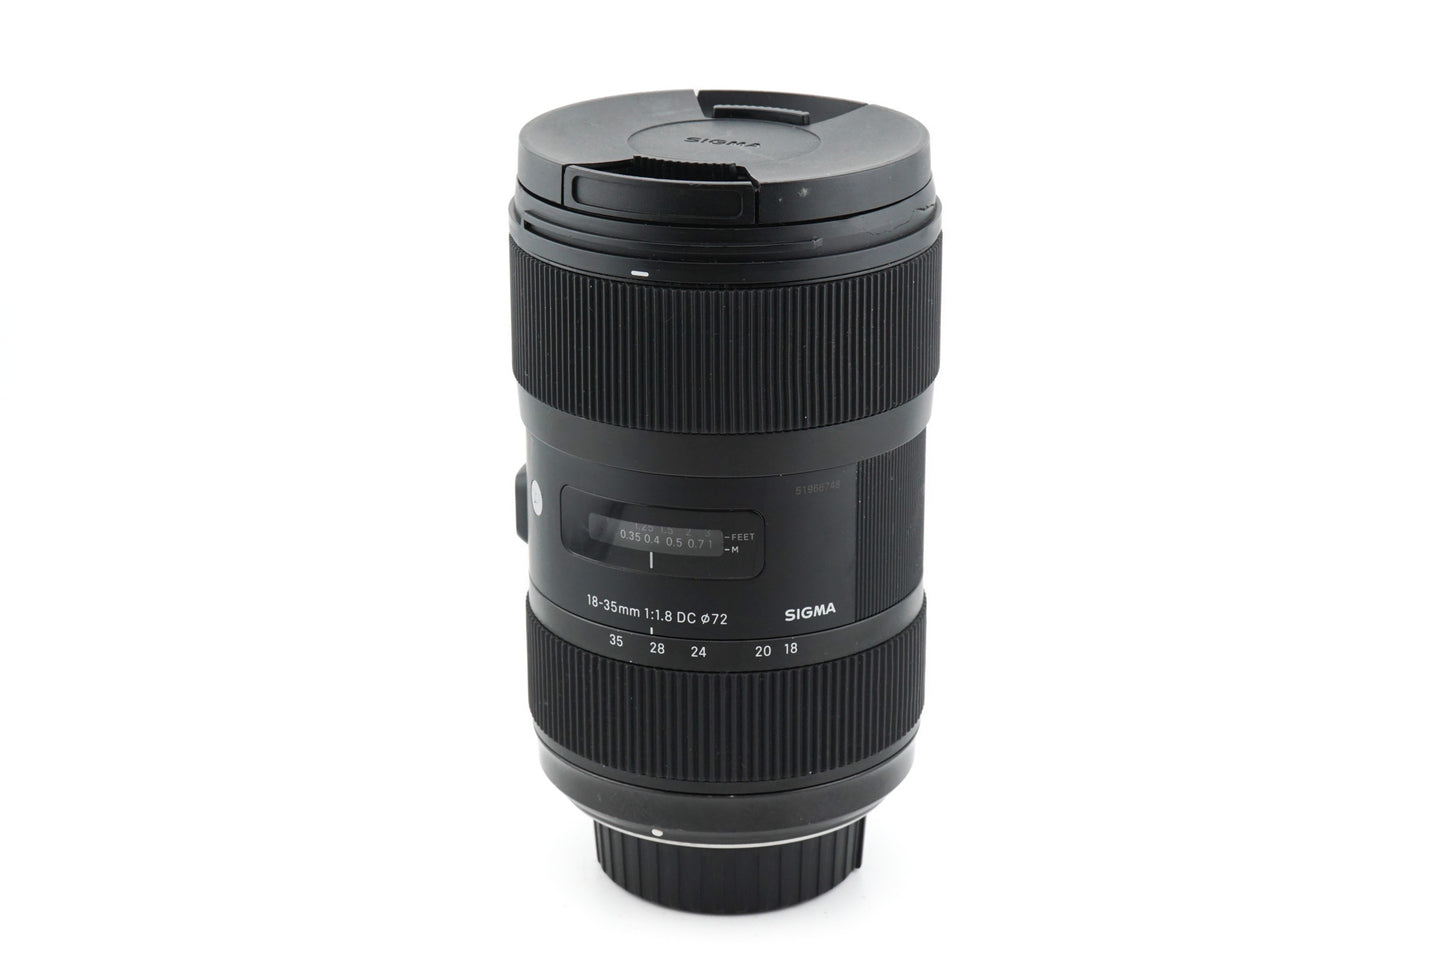 Sigma 18-35mm f1.8 DC HSM Art - Lens